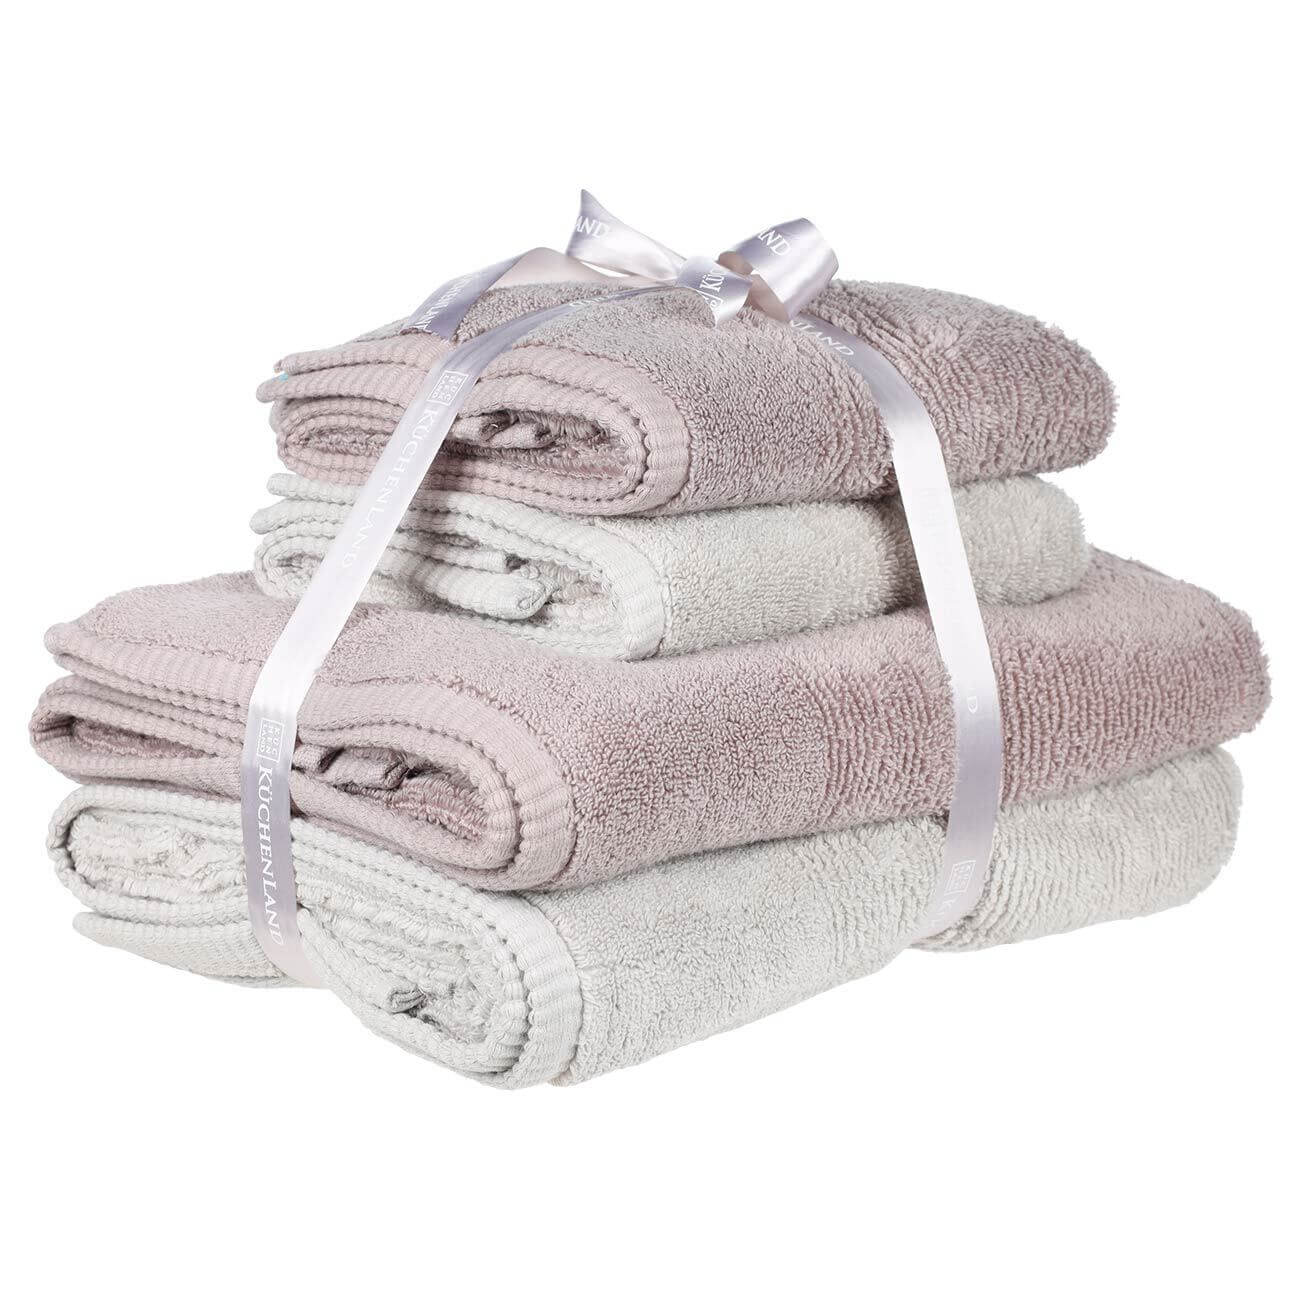 Towel set, 50x90 / 70x140 cm, 4 pcs, cotton, purple/light gray, Terry cotton изображение № 1